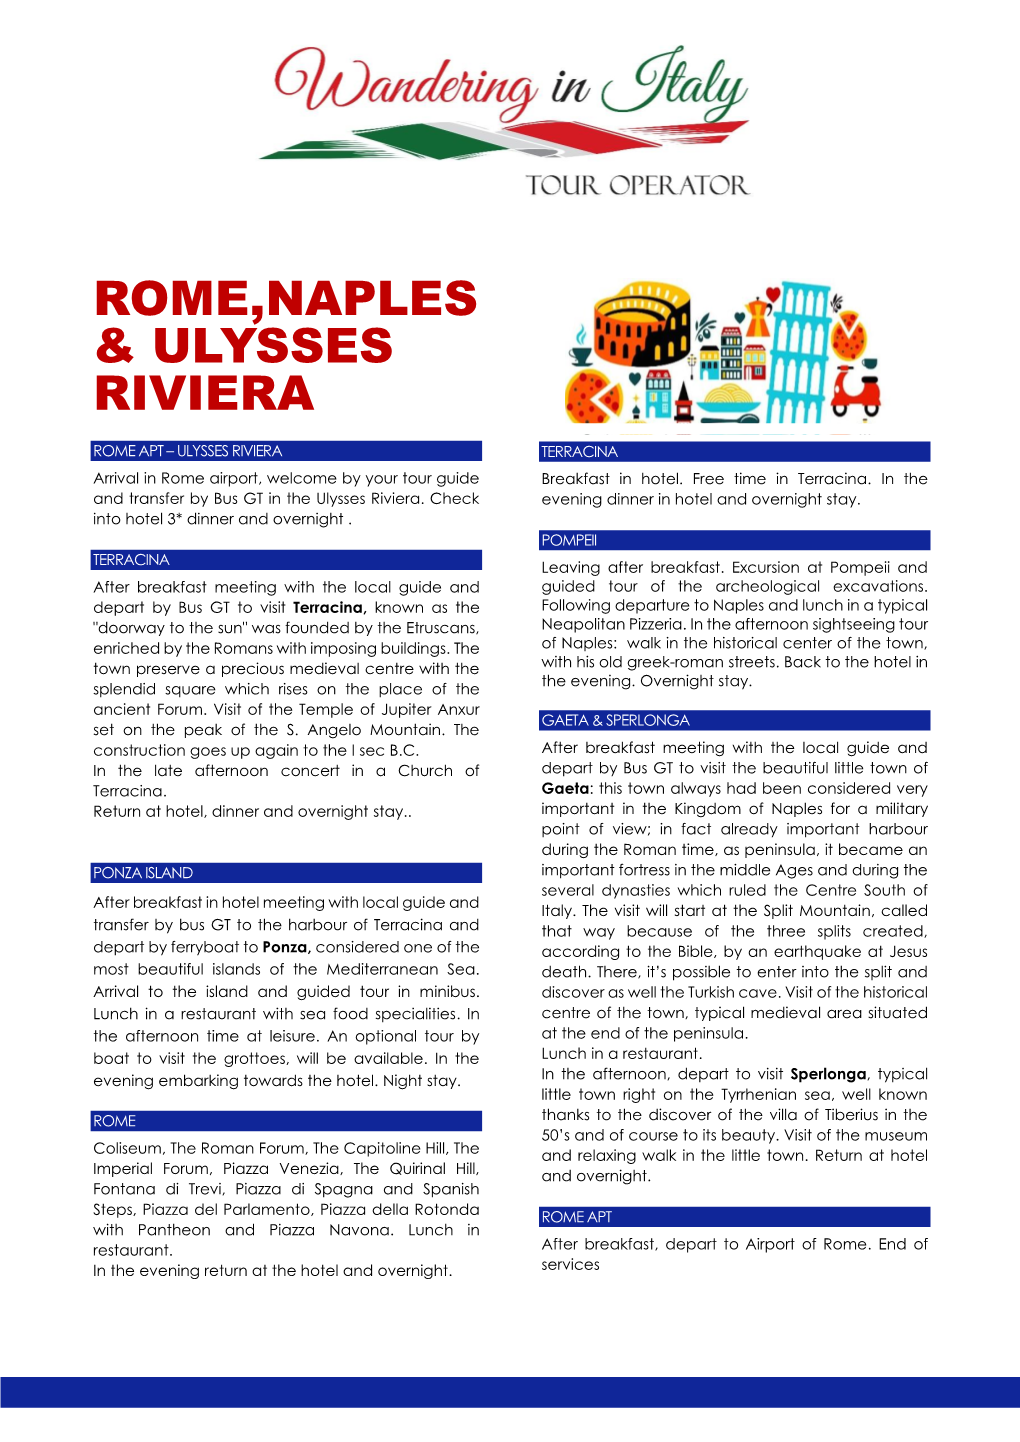 Rome,Naples & Ulysses Riviera